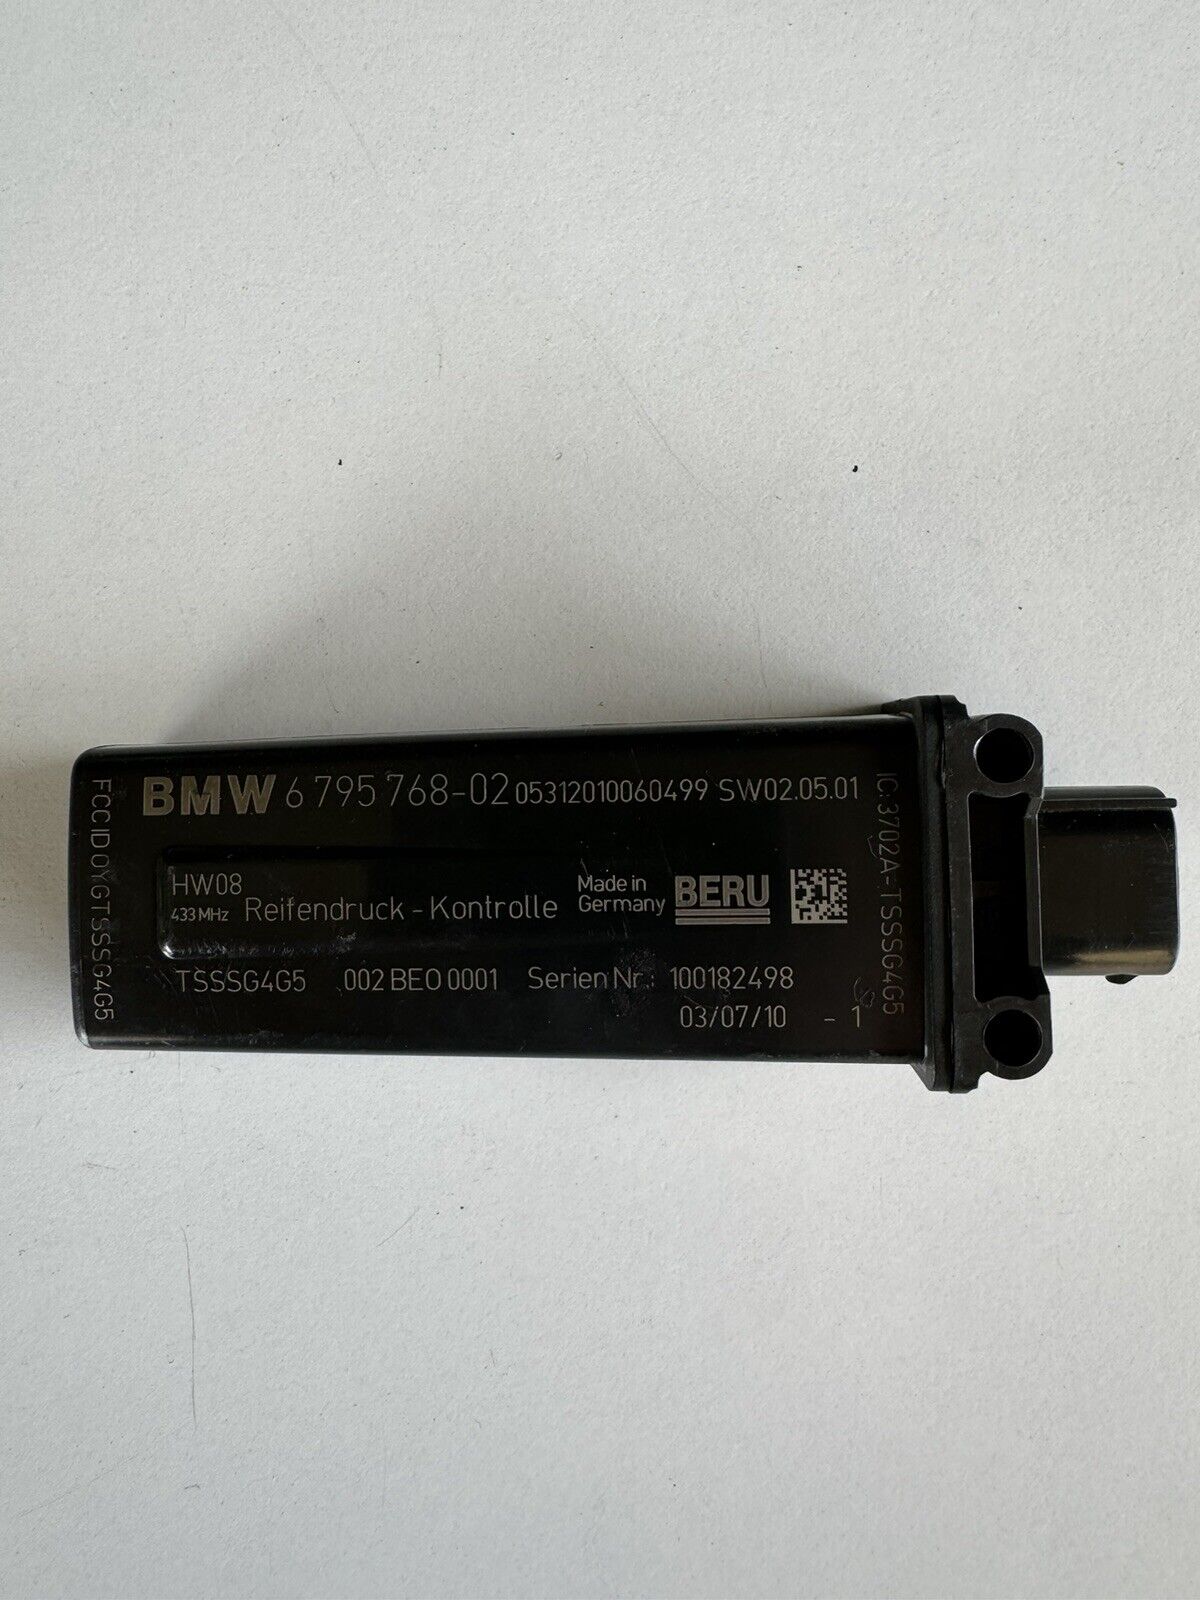 10-13 BMW E90 E92 E84 E70 RDC TPMS TIRE PRESSURE MONITOR SYSTEM SENSOR 6795768